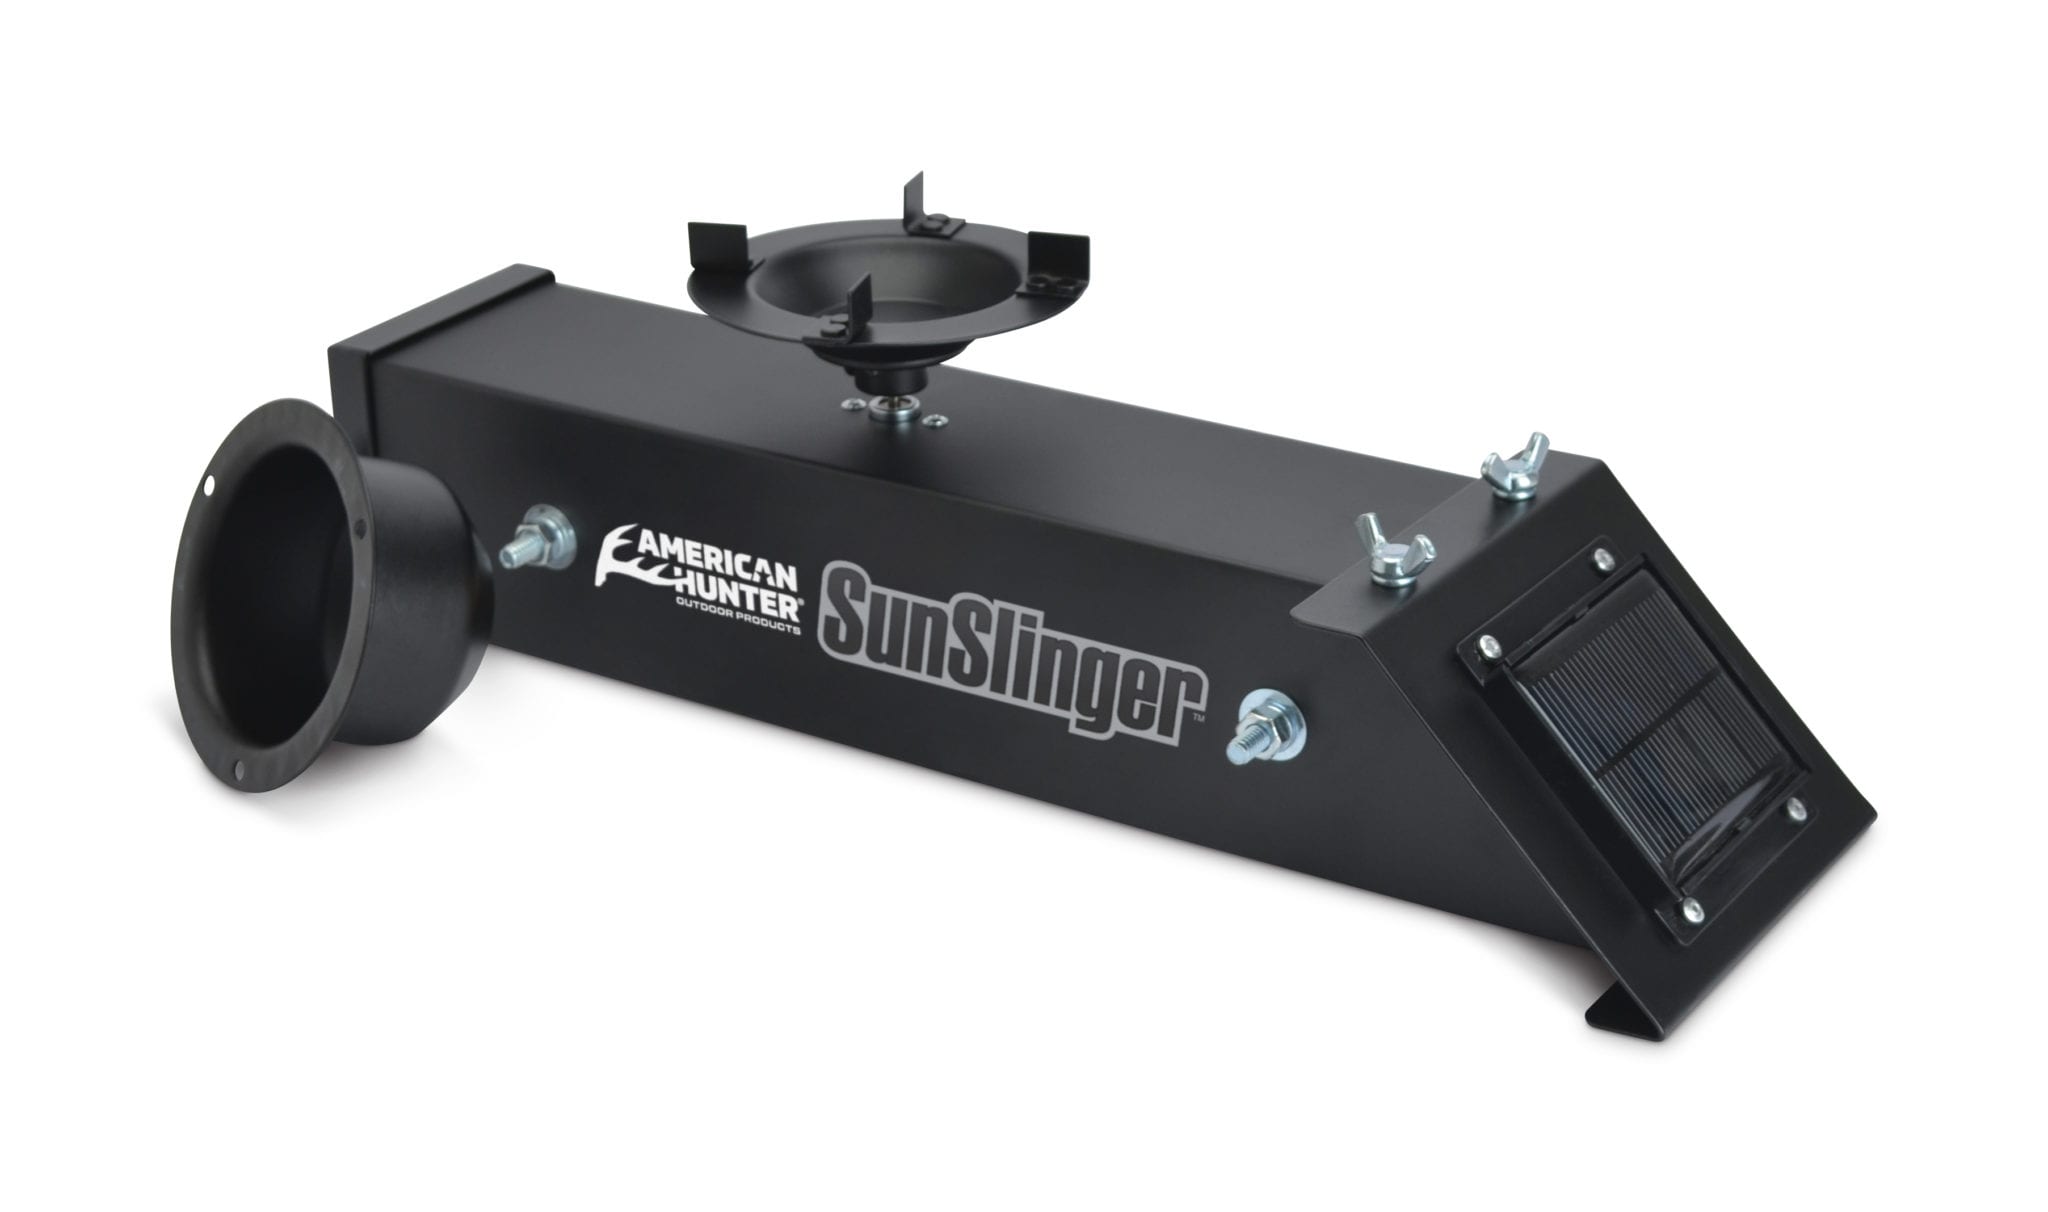 Gsm Outdoors AH-SSLNG-KIT American Hunter Sunslinger Kit ahsslngkit 